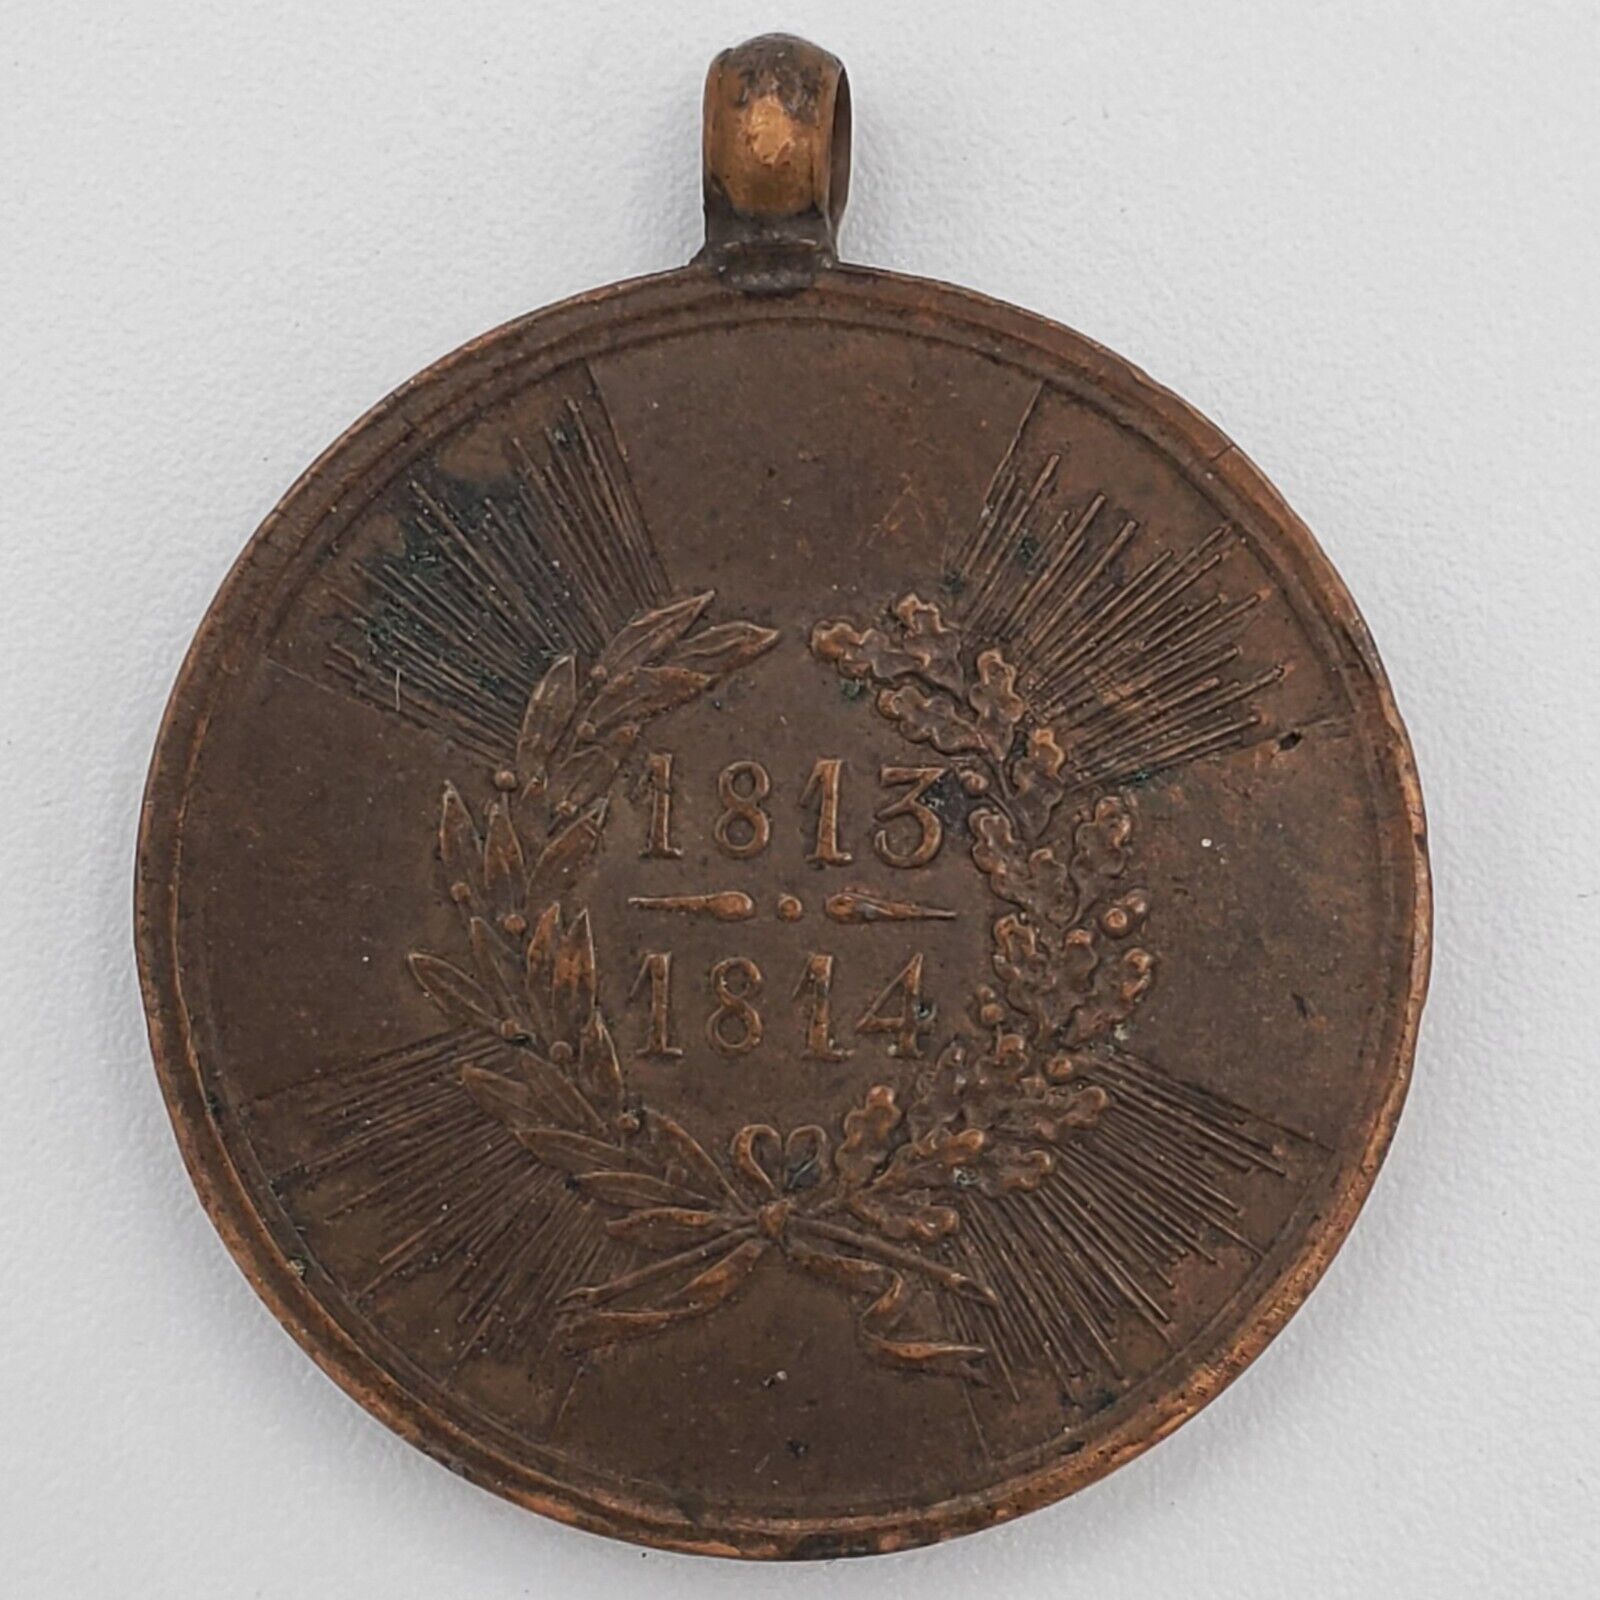 Original Napoleon War German Medal 1813 1814 bronze cannon award Prussia cannon